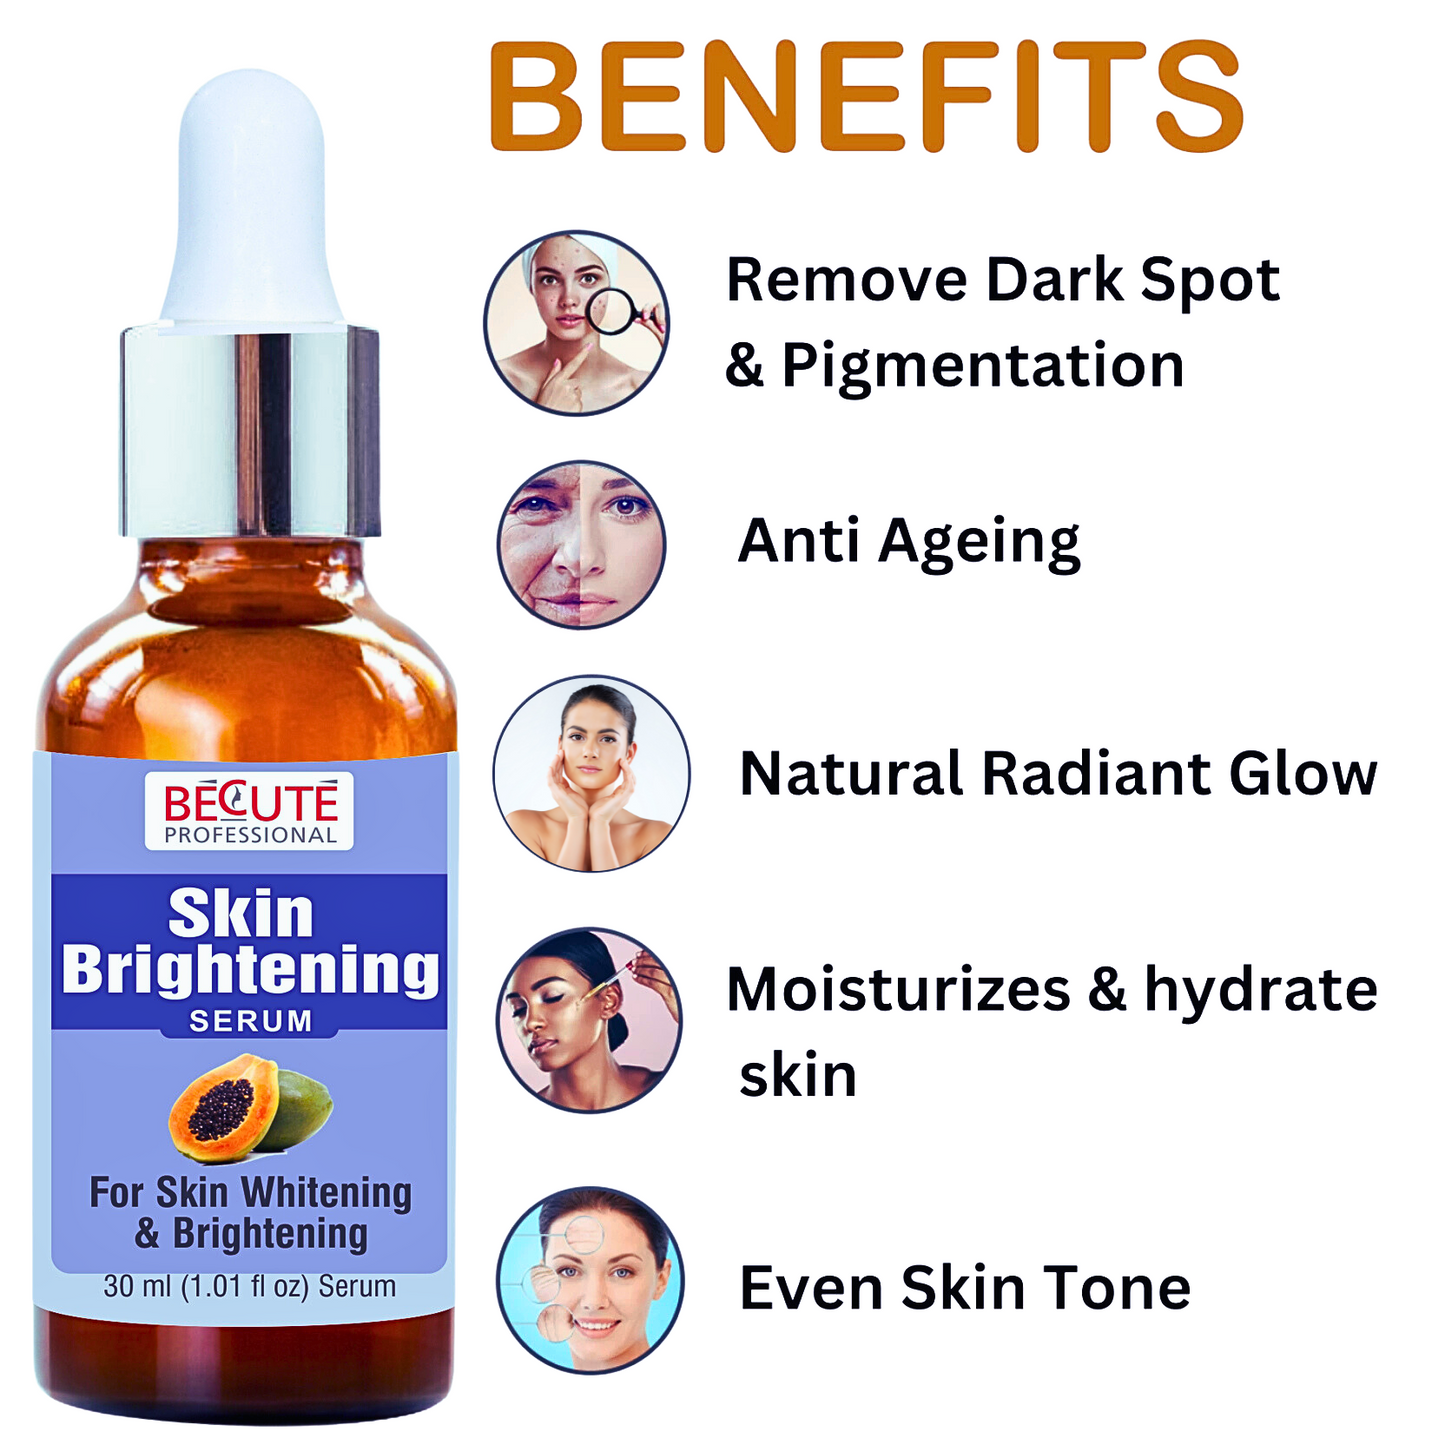 BECUTE Professional® Dark Spot Face Cream+Skin Brightening Serum - Combo Pack, 80 mL